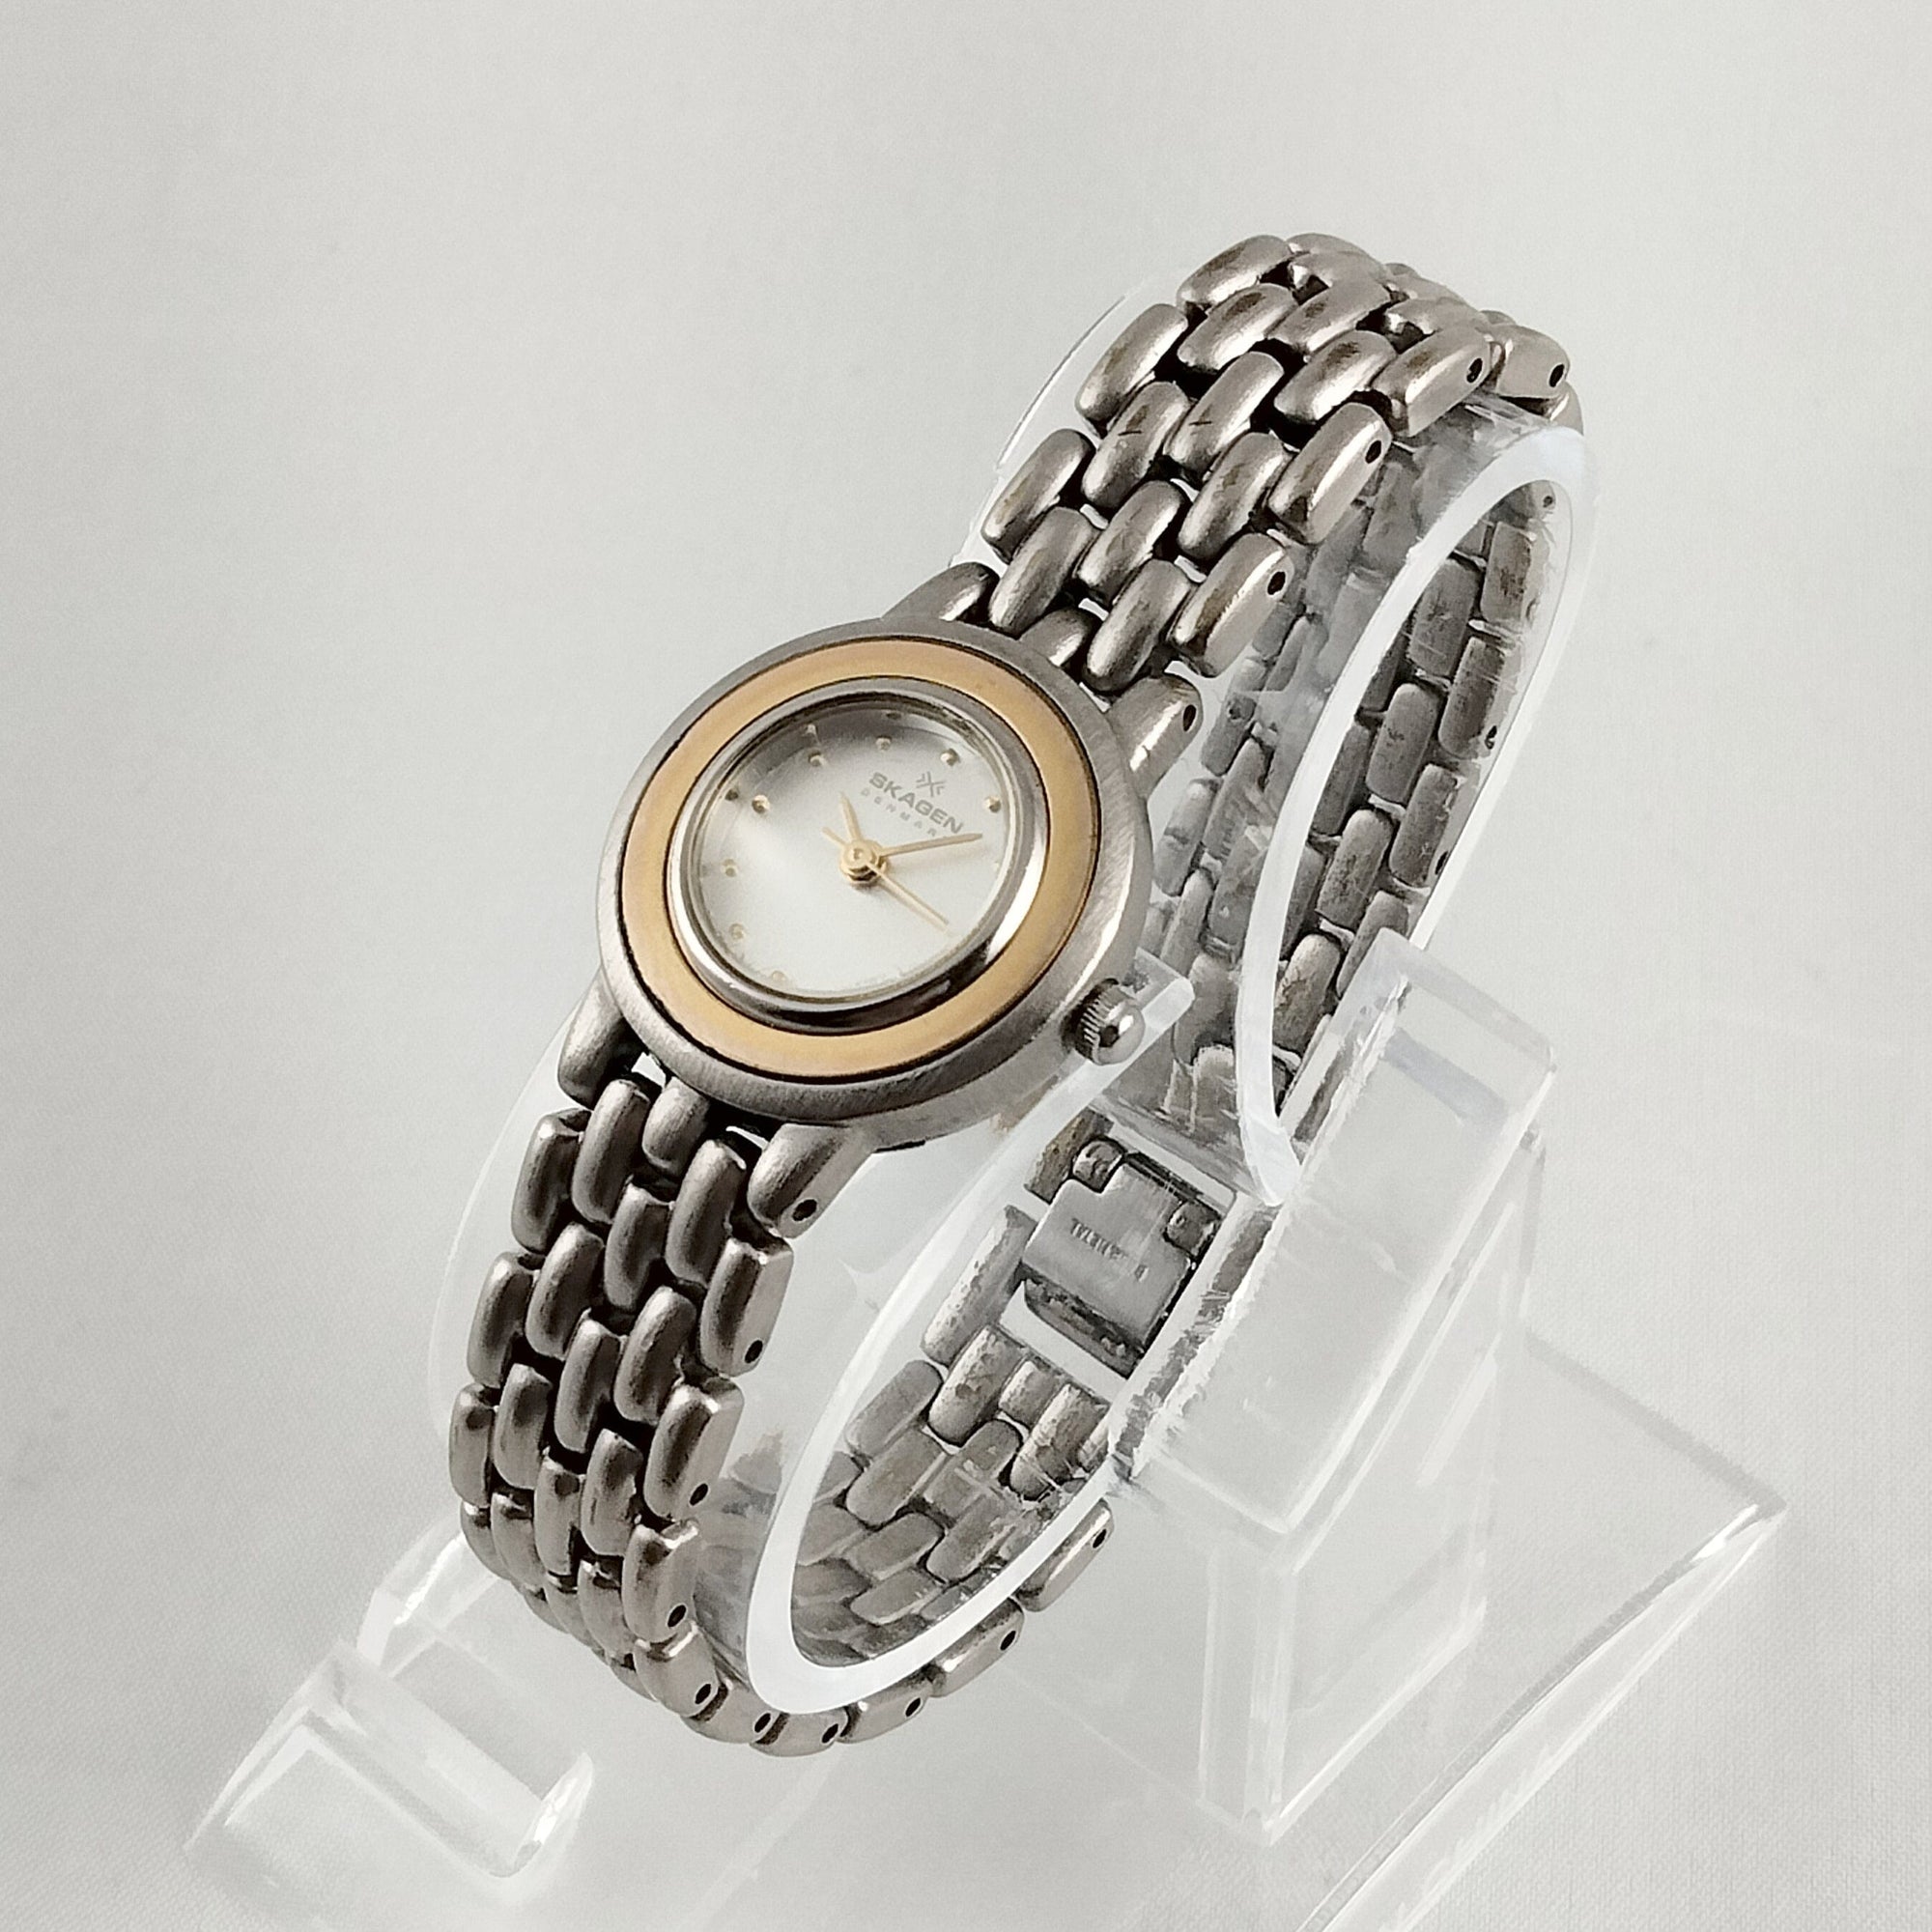 I Like Mikes Mid Century Modern Watches Skagen Women's Stainless Steel Watch, Gold Tone Details, Bracelet Strap